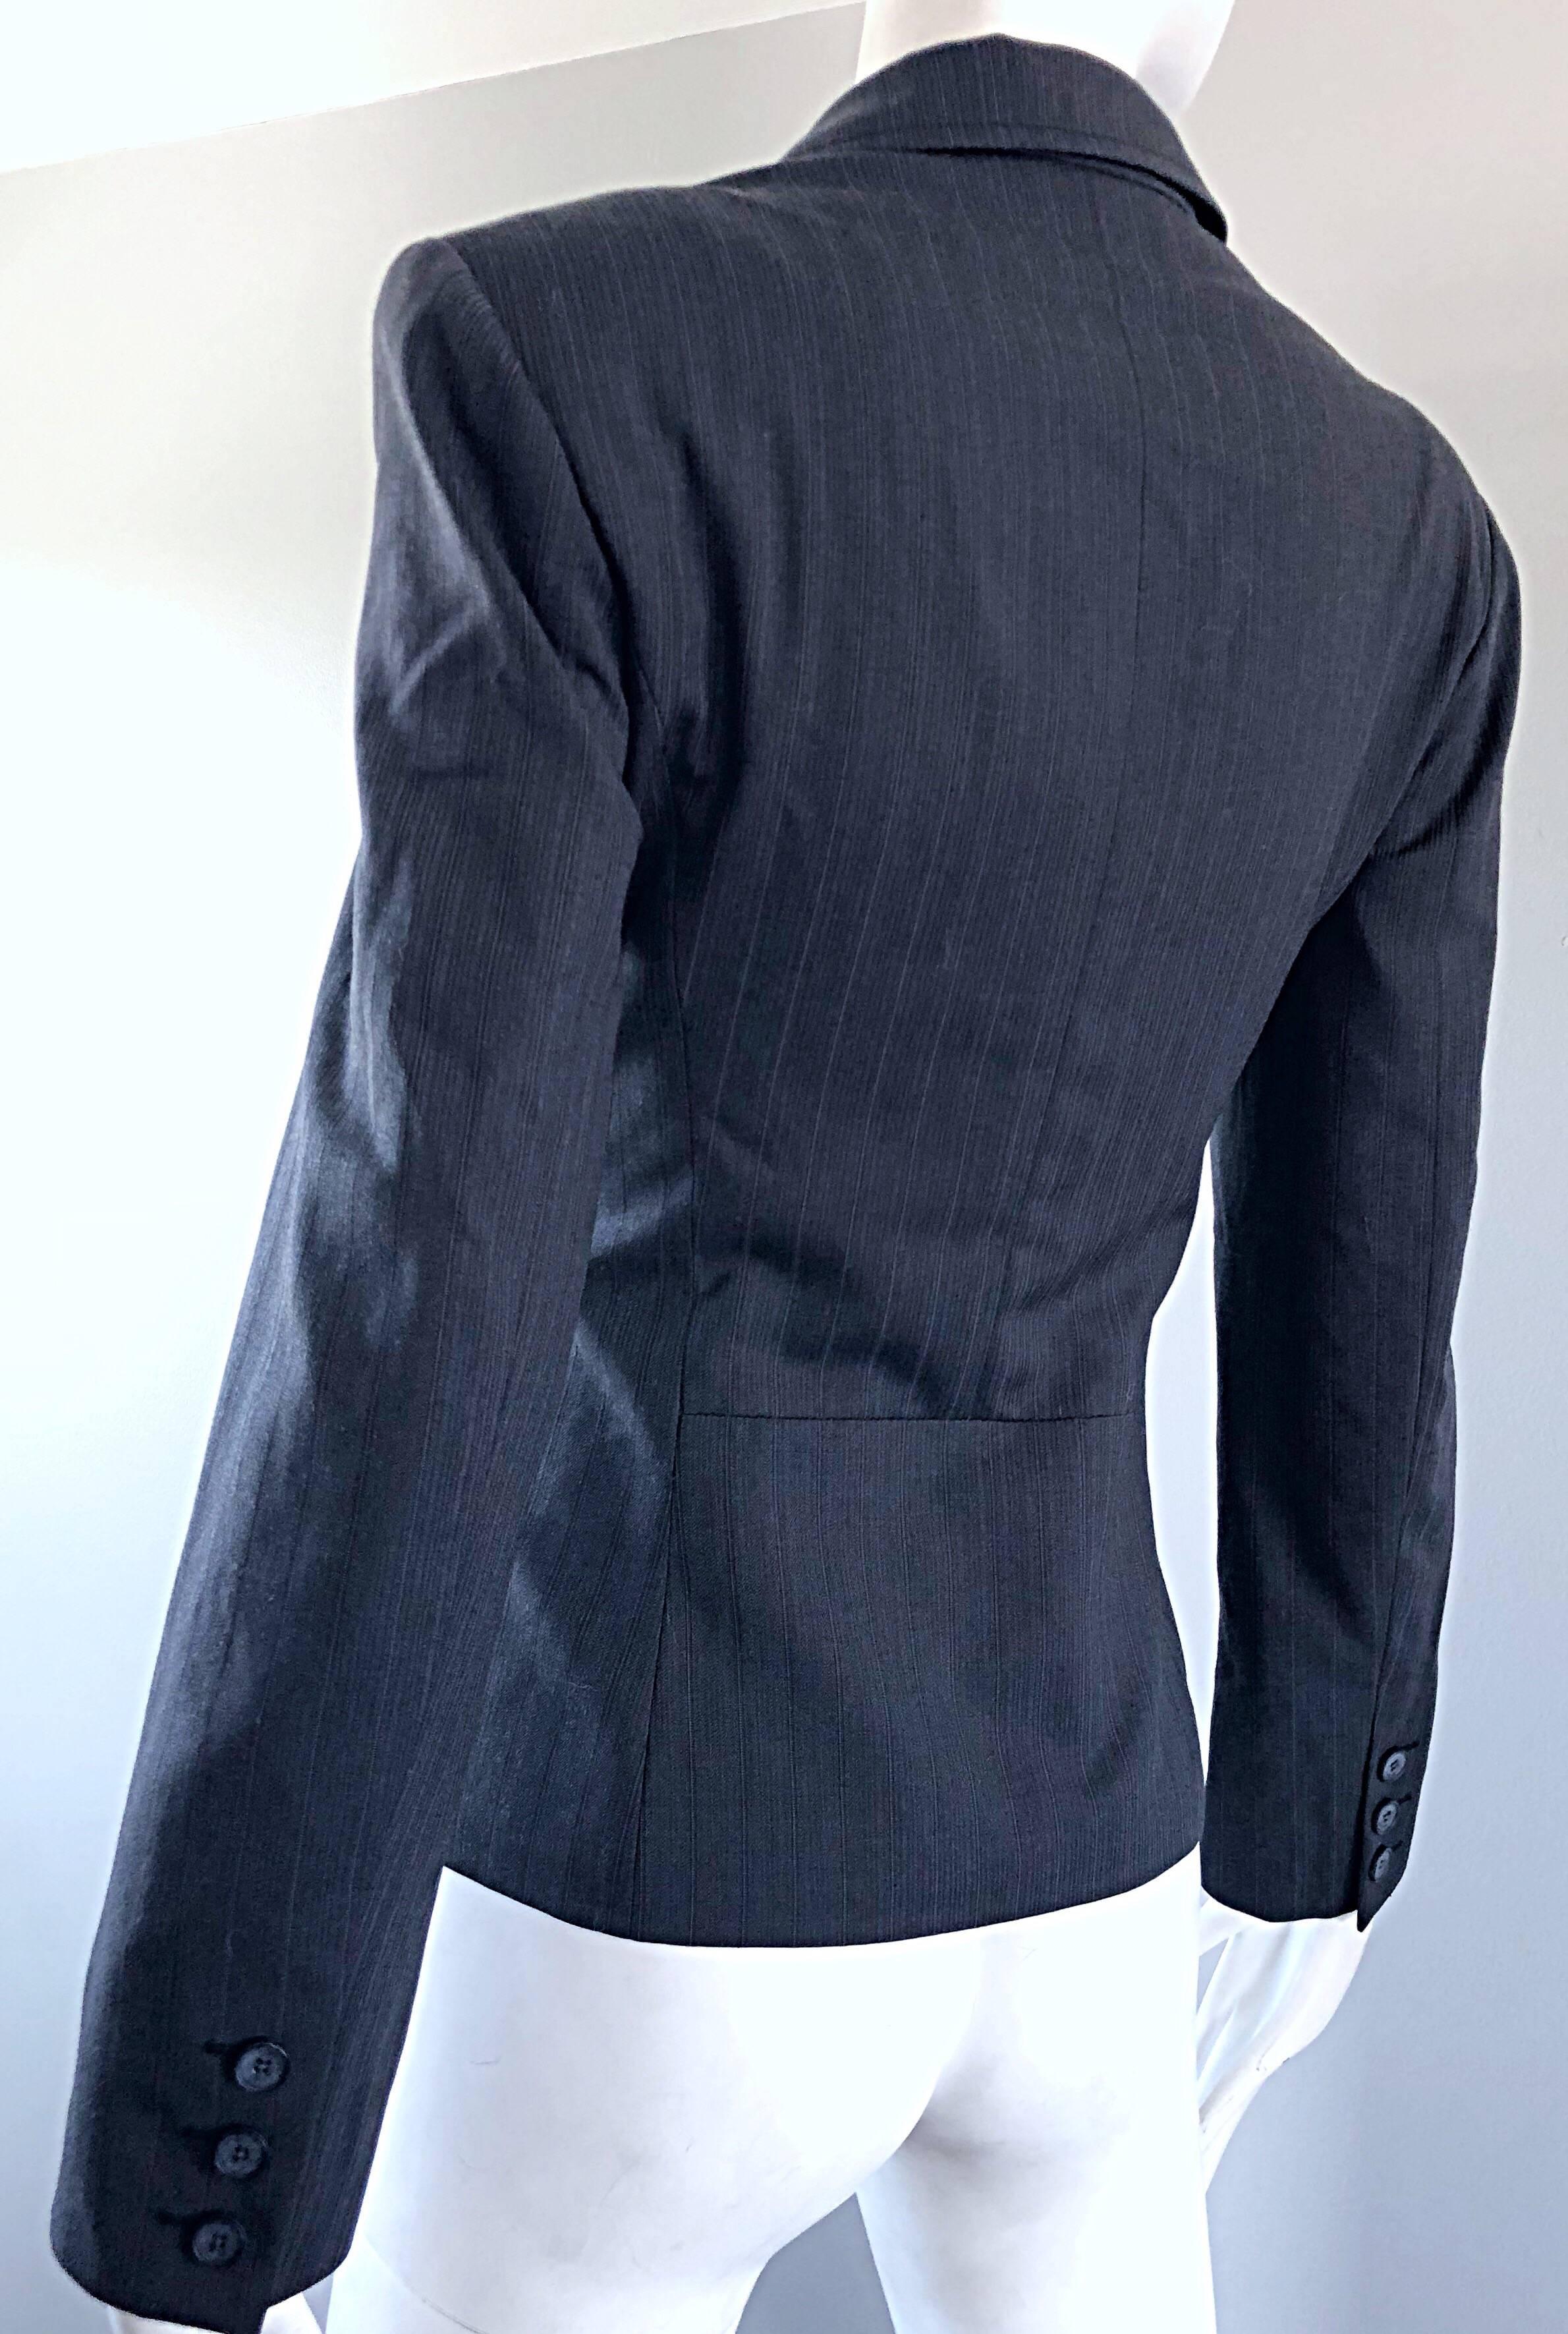 John Galliano Early 2000s Size 42 Gray + Purple Pinstripe Blazer Jacket For Sale 2